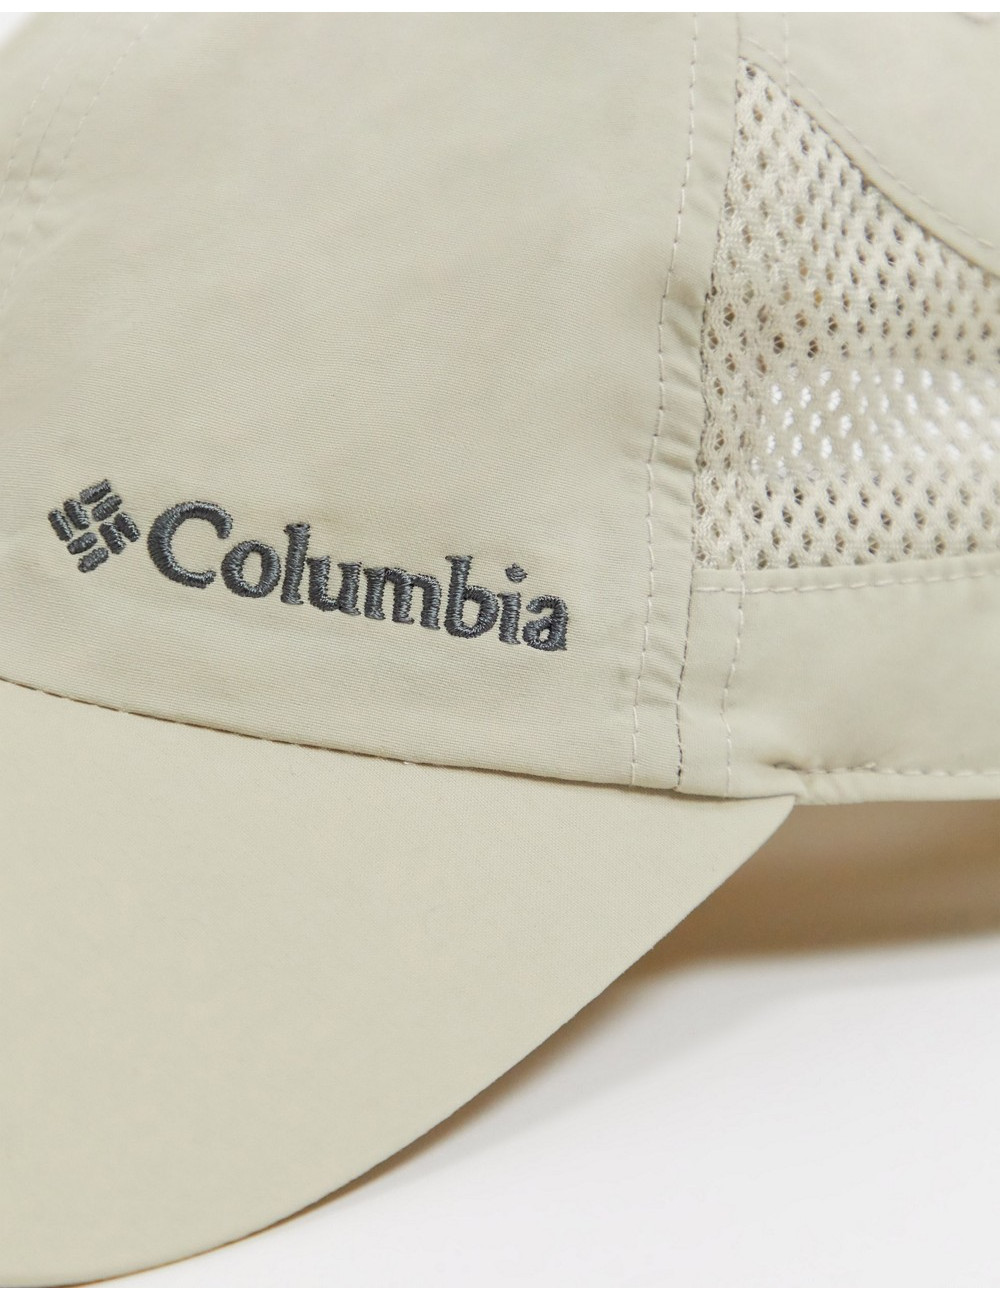 Columbia Tech Shade cap in...